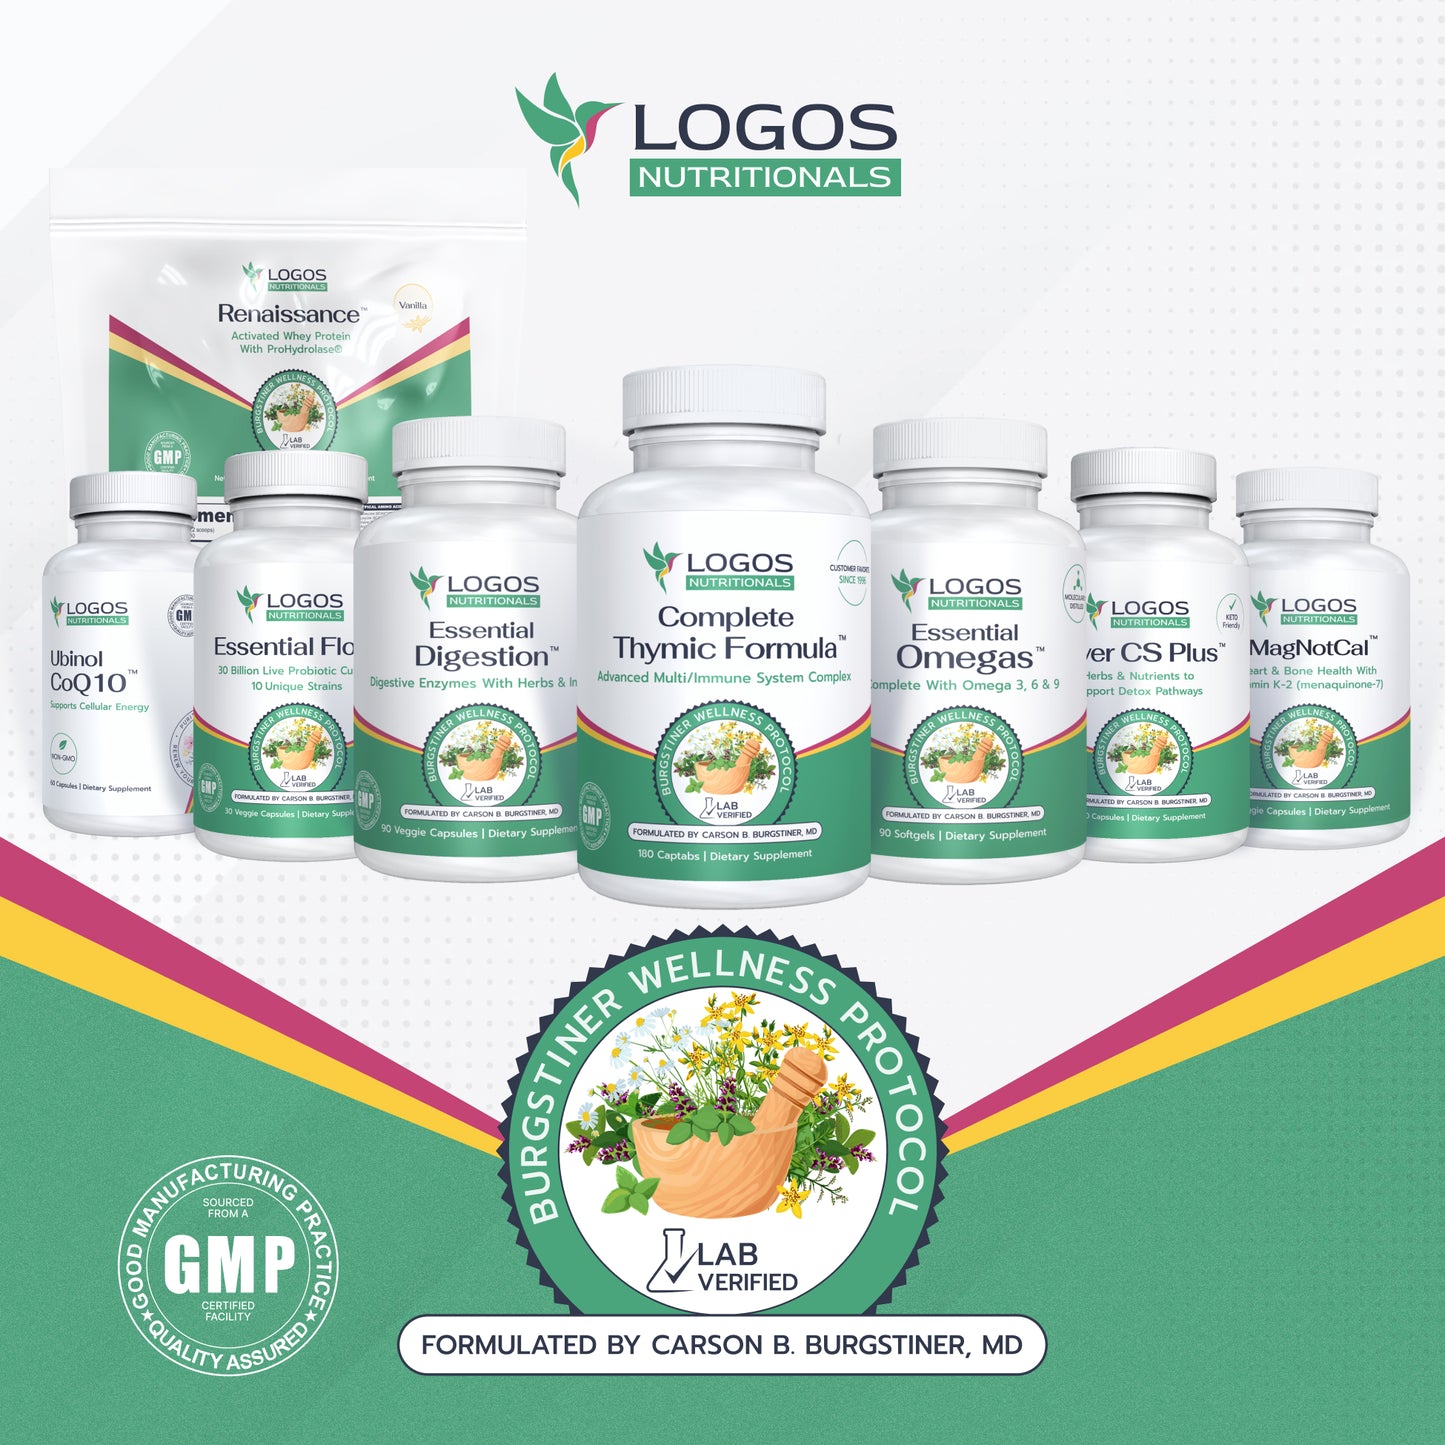 The Logos Lyme Disease Protocol & Extension